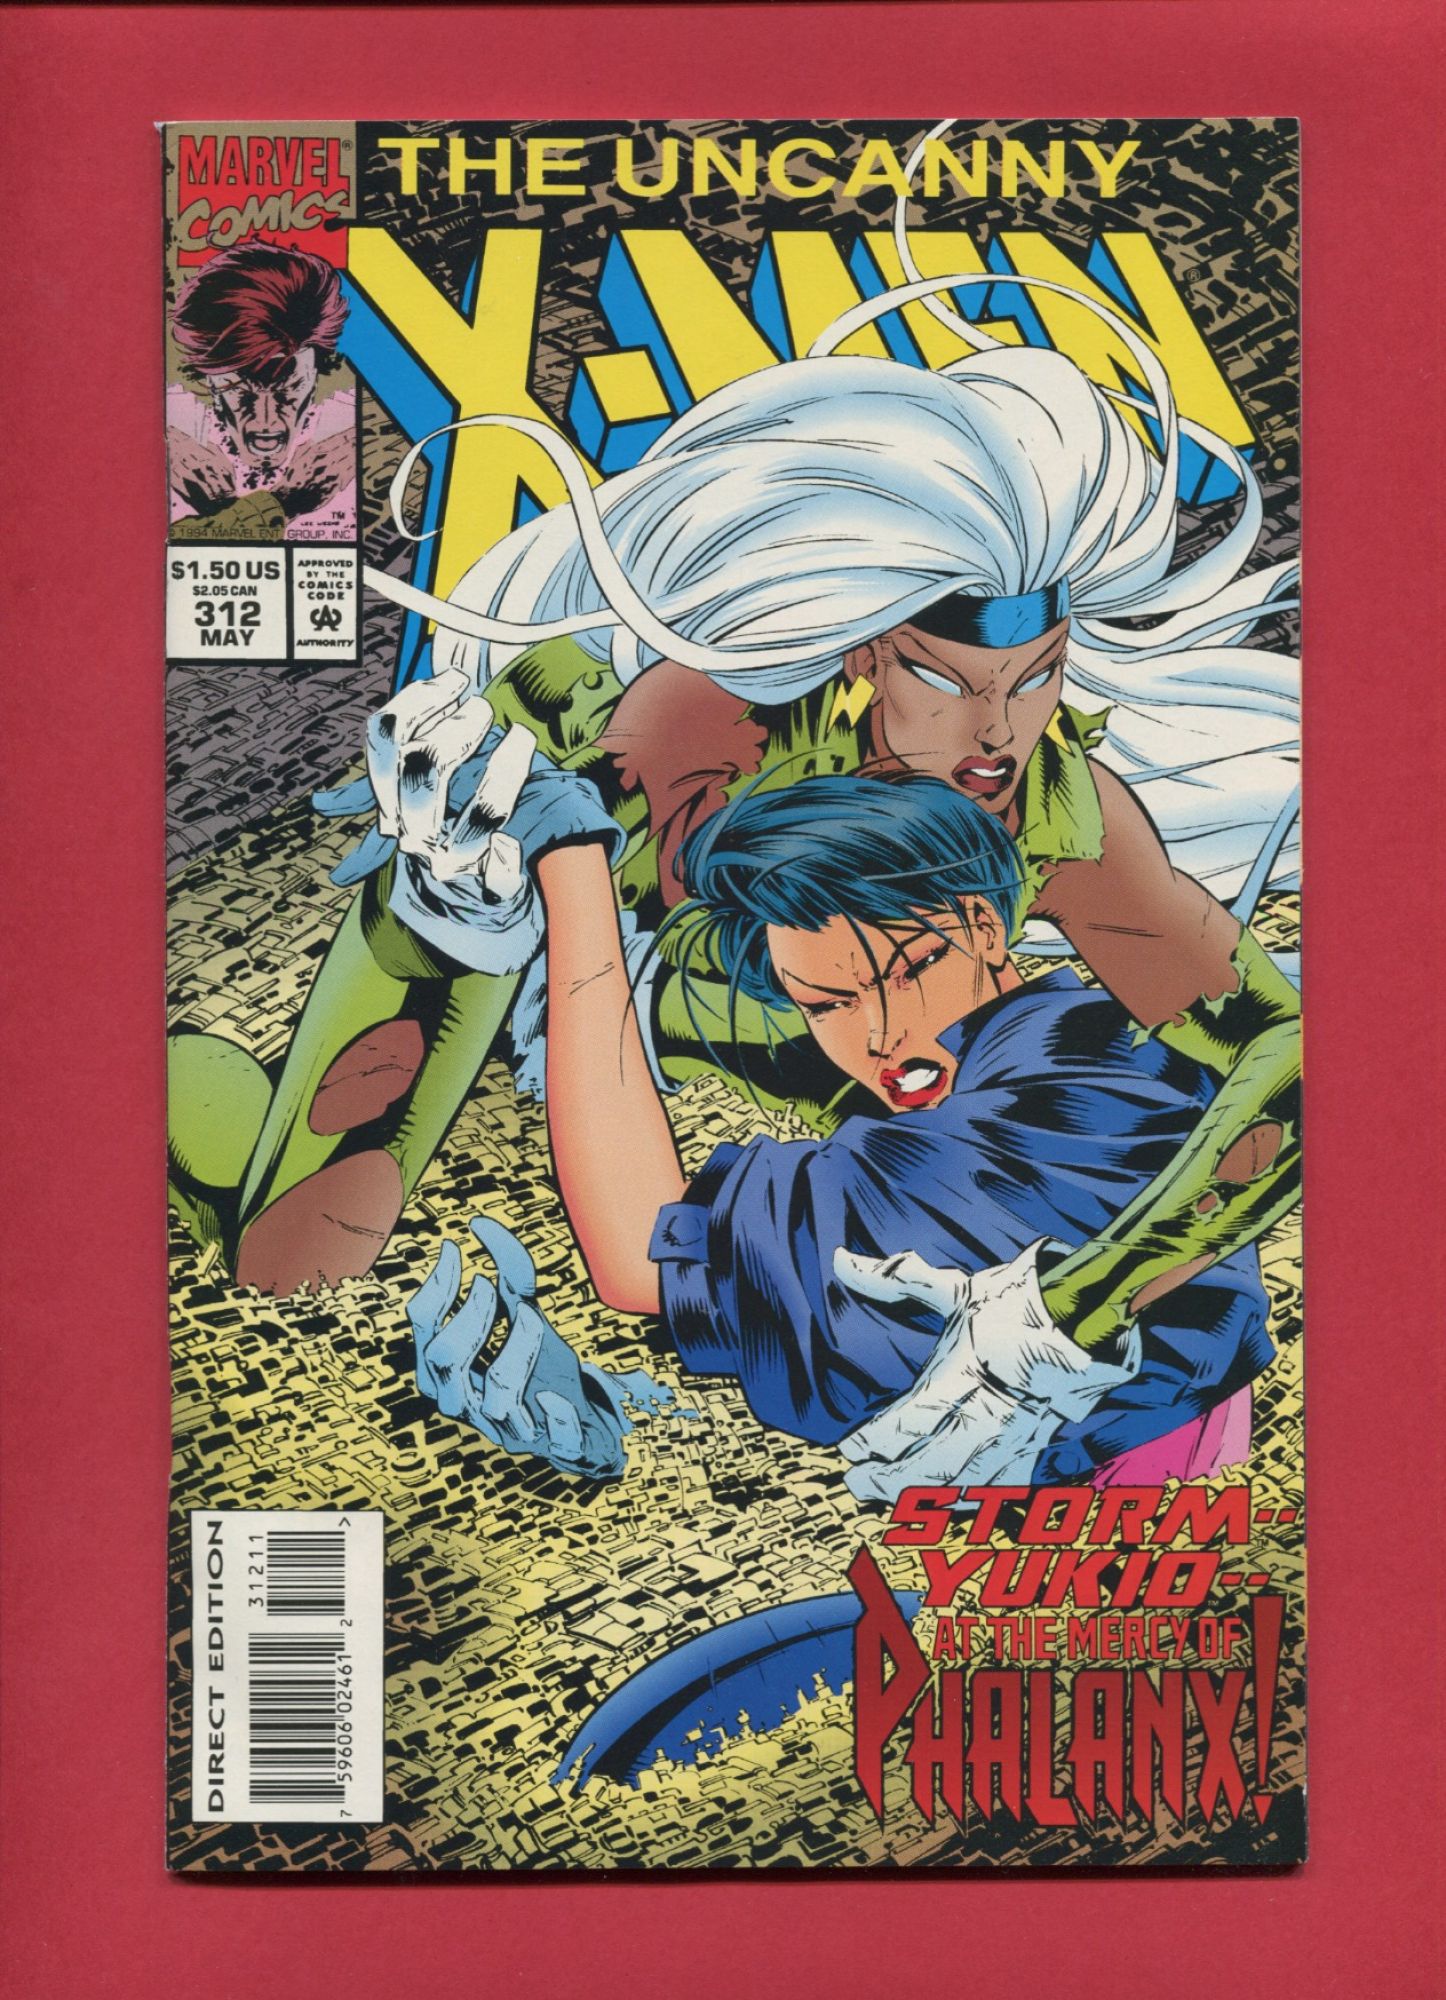 Uncanny X-Men #312, May 1994, 9.2 NM-